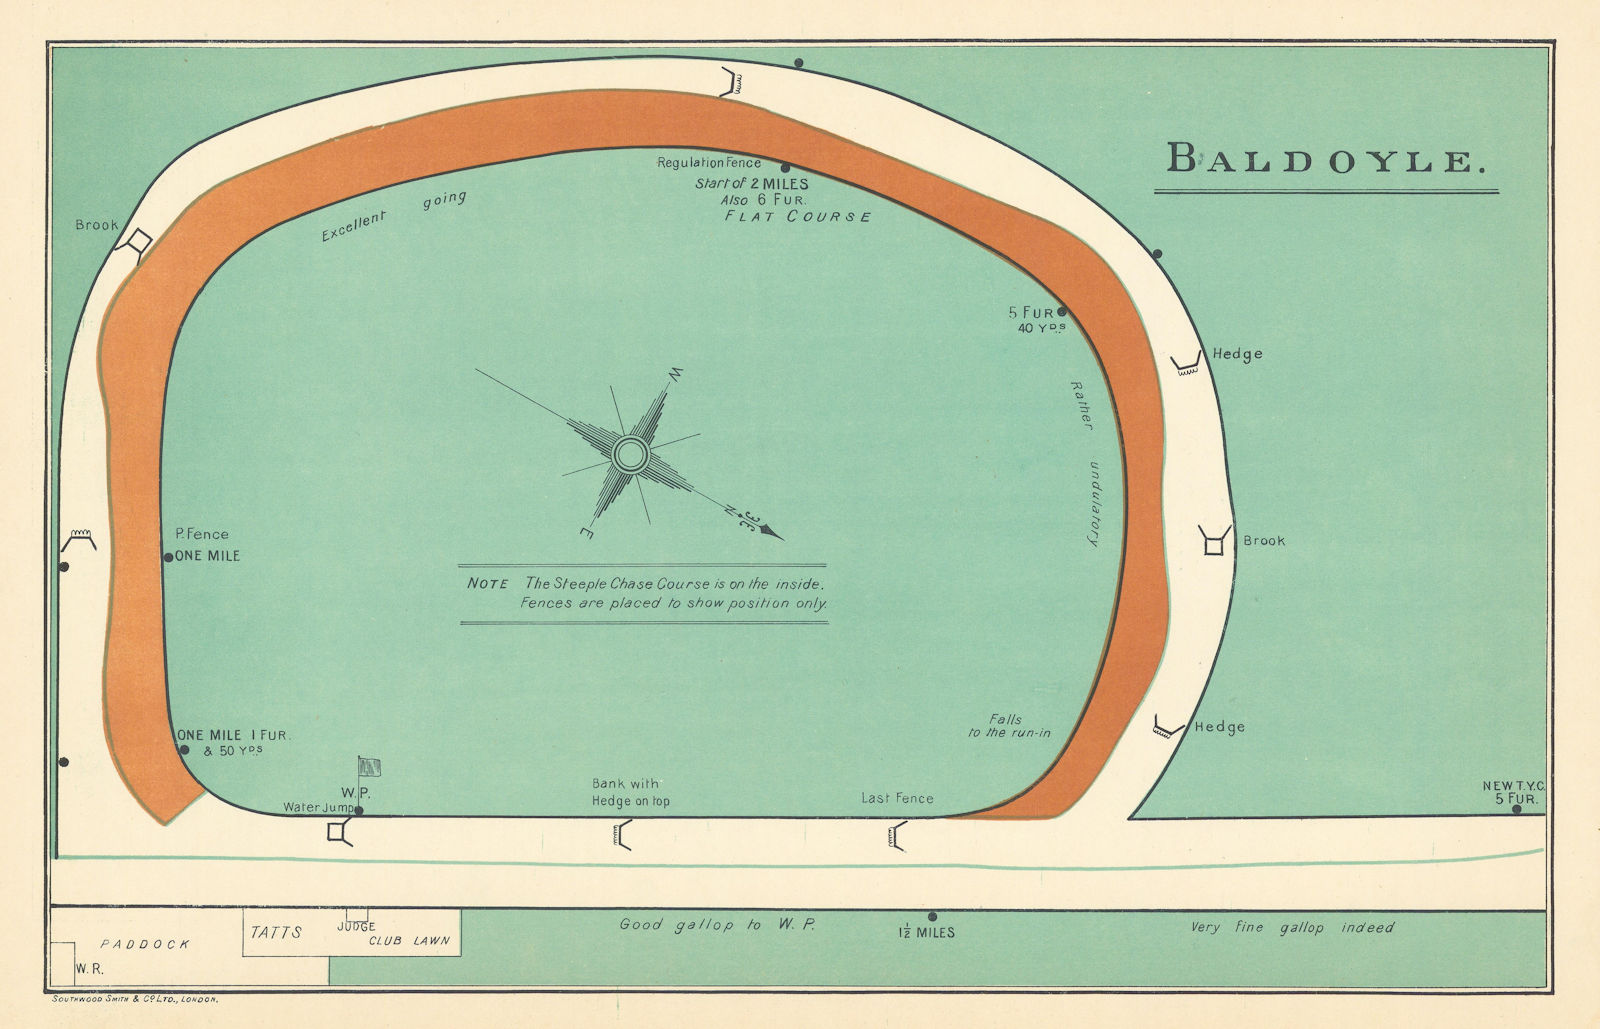 Baldoyle Metropolitan racecourse, Ireland. Closed 1972. BAYLES 1903 old map